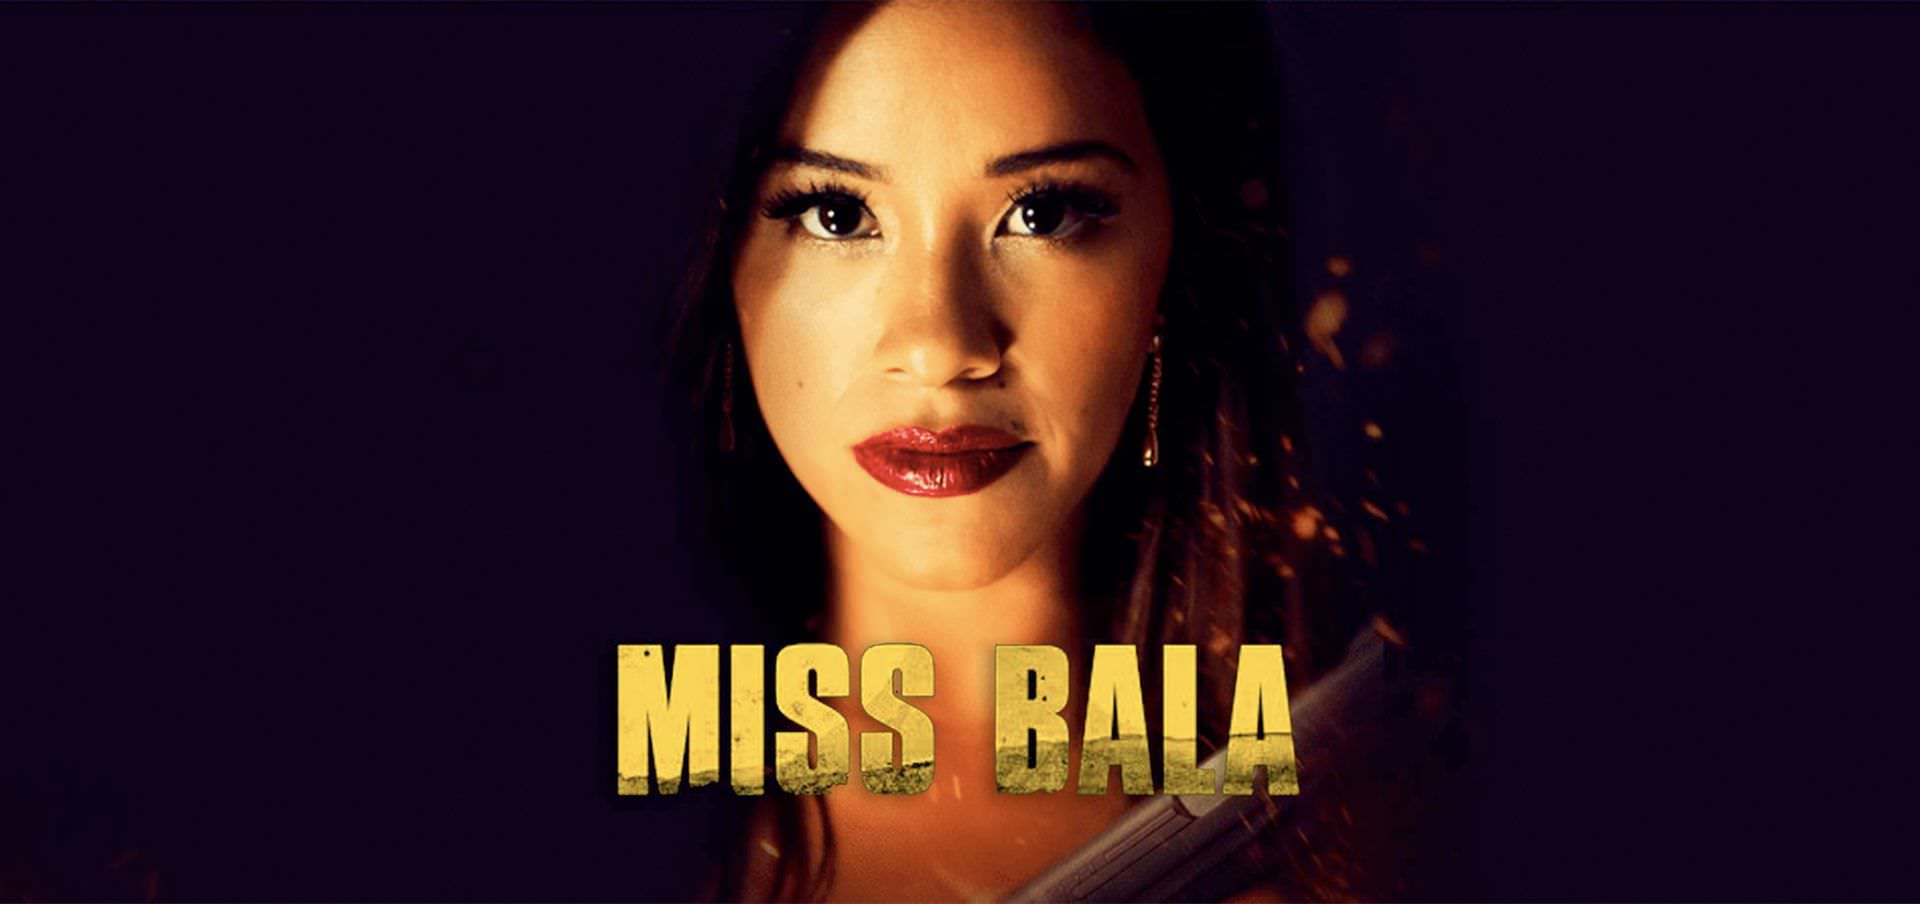 فیلم Miss Bala